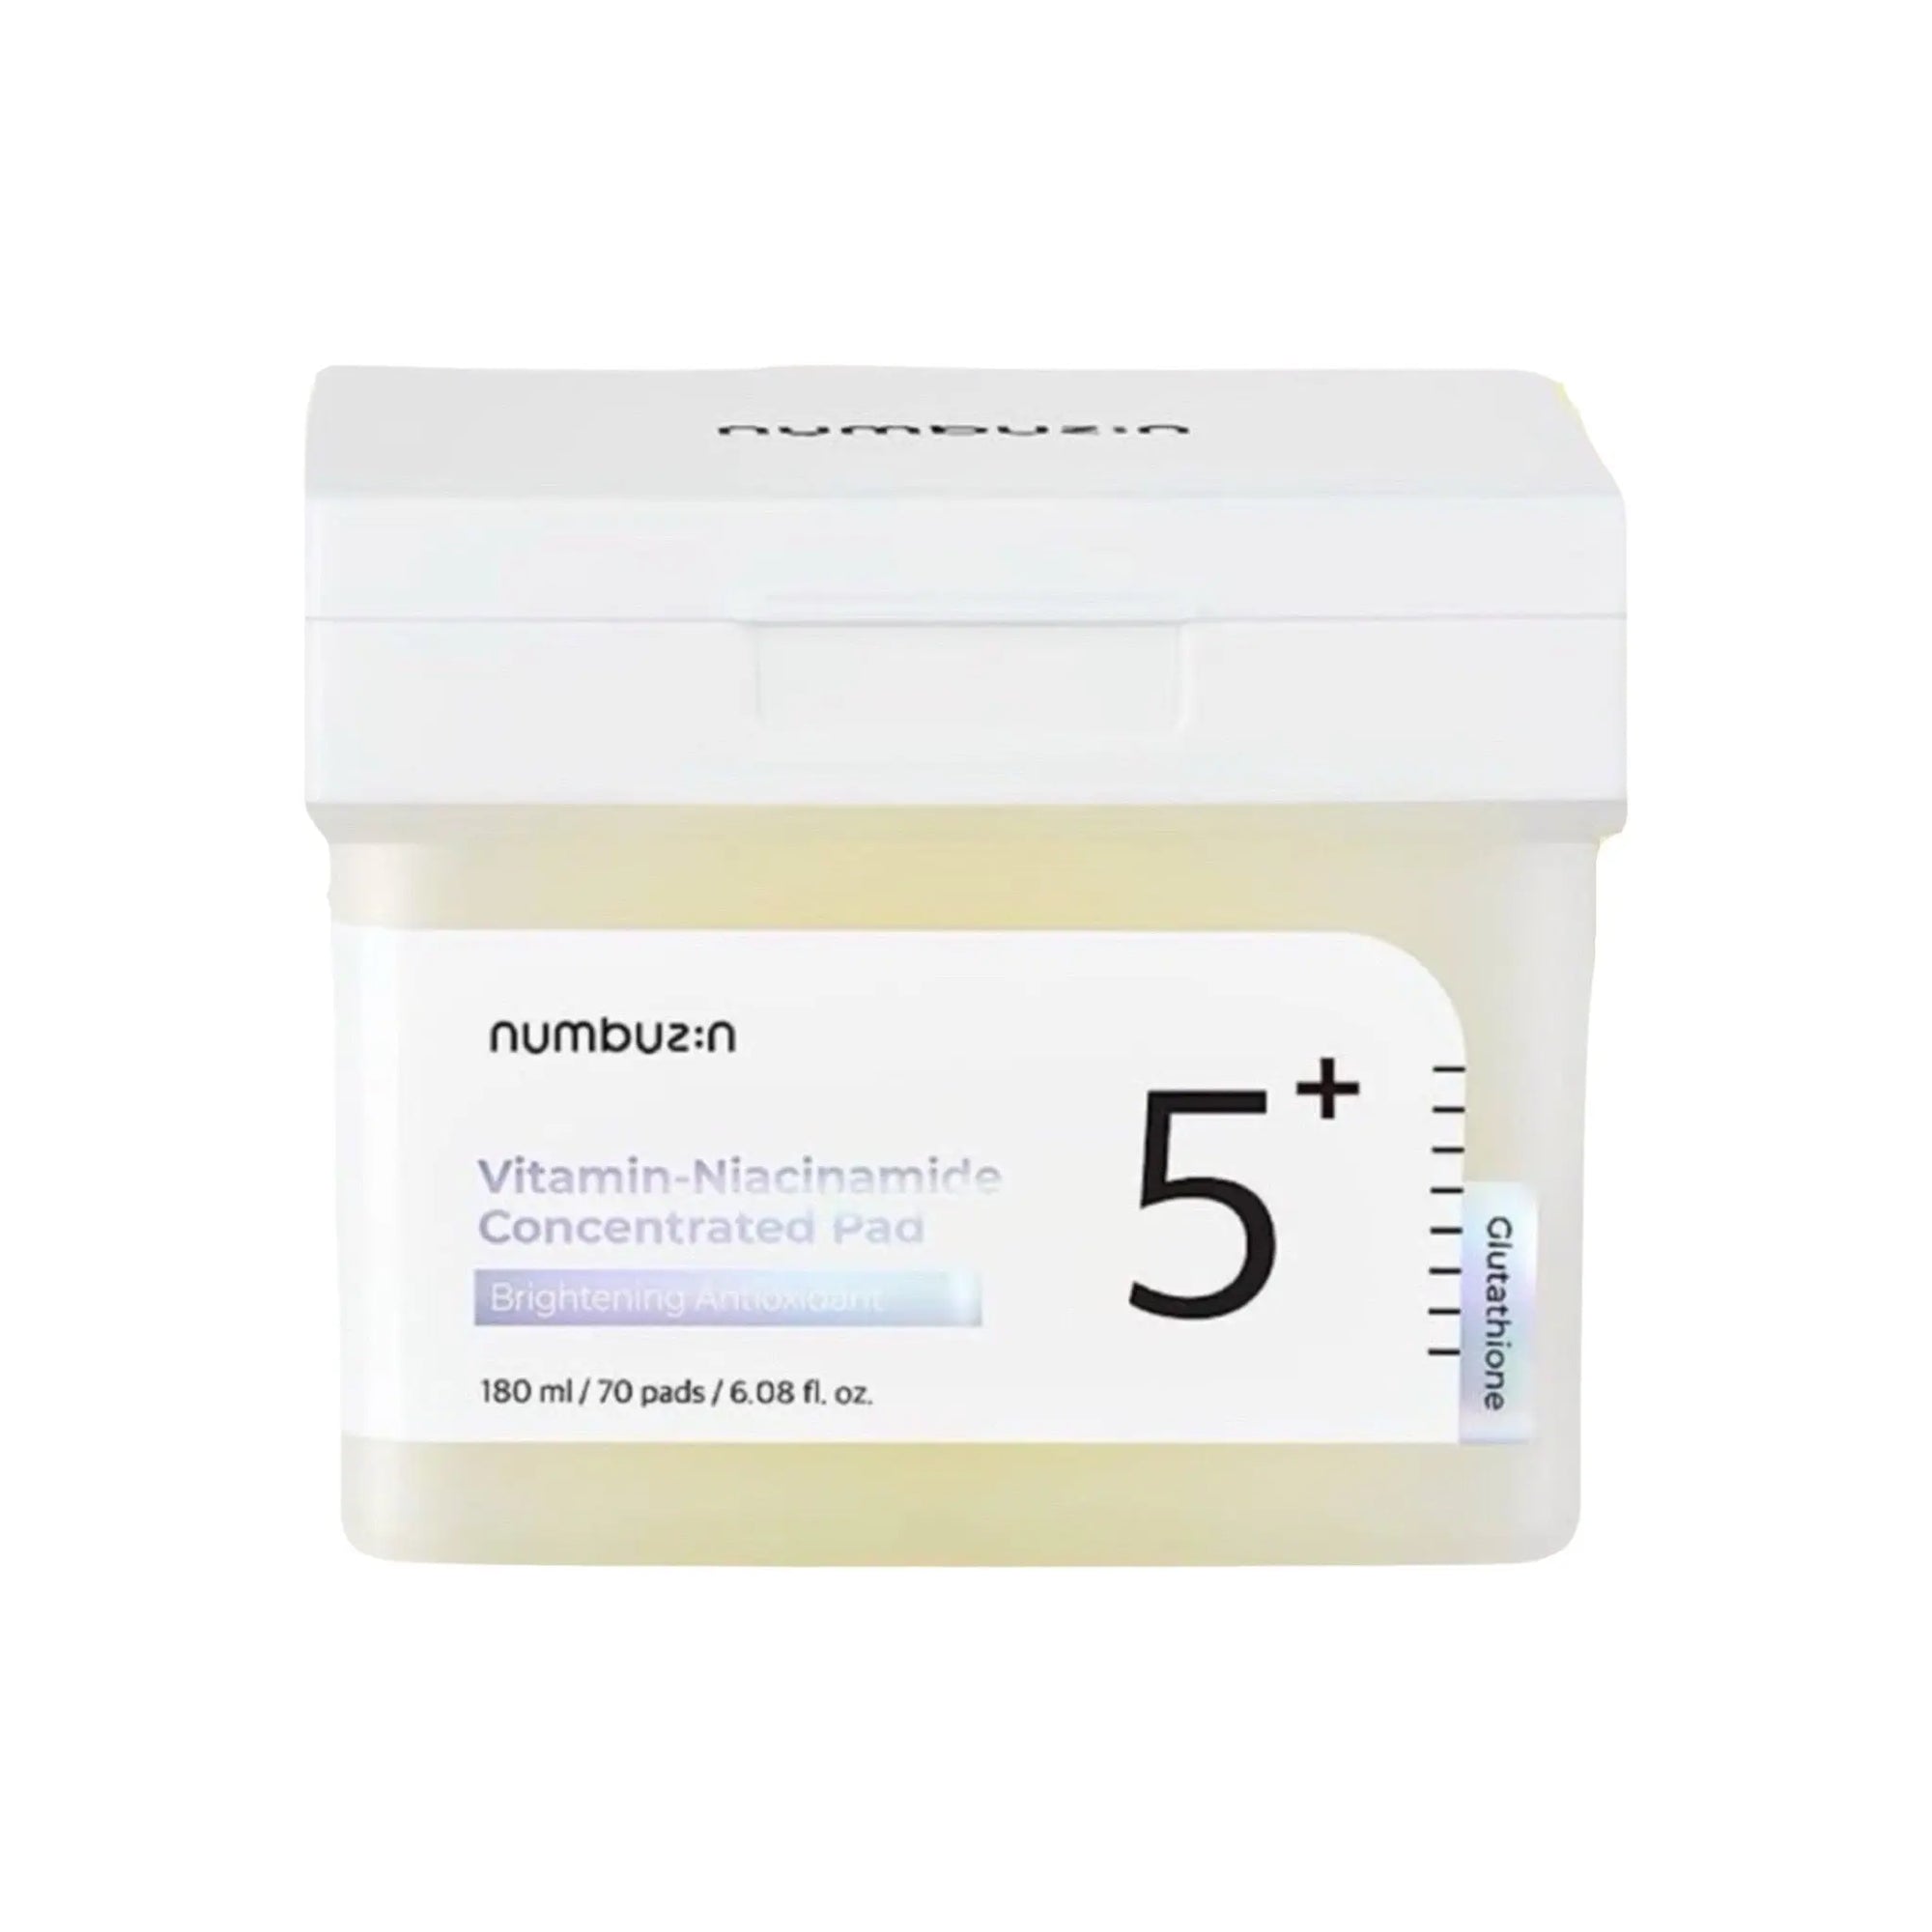 Numbuzin - No.5 Vitamin-Niacinamide Concentrated Pad 180mL (70 Pads) Numbuzin